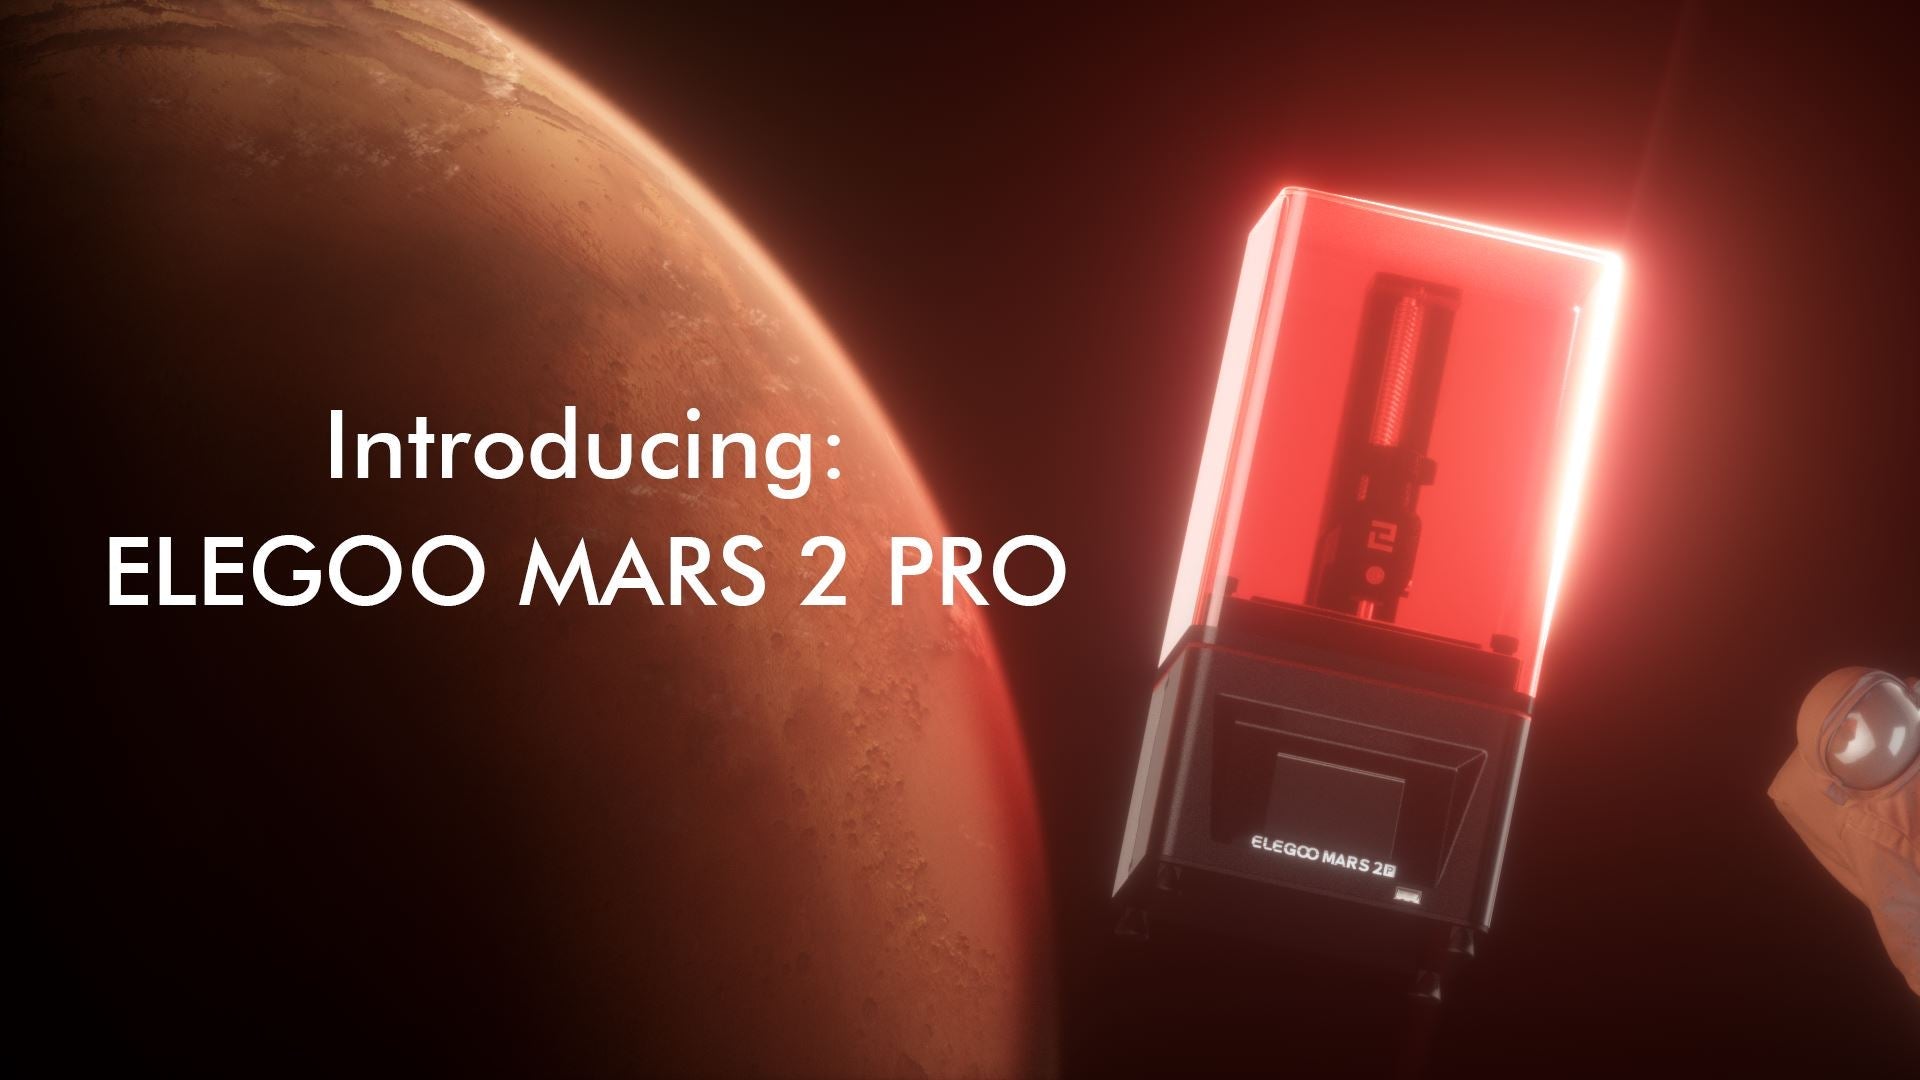 Enjoy your ride to ELEGOO Mars 2 Pro